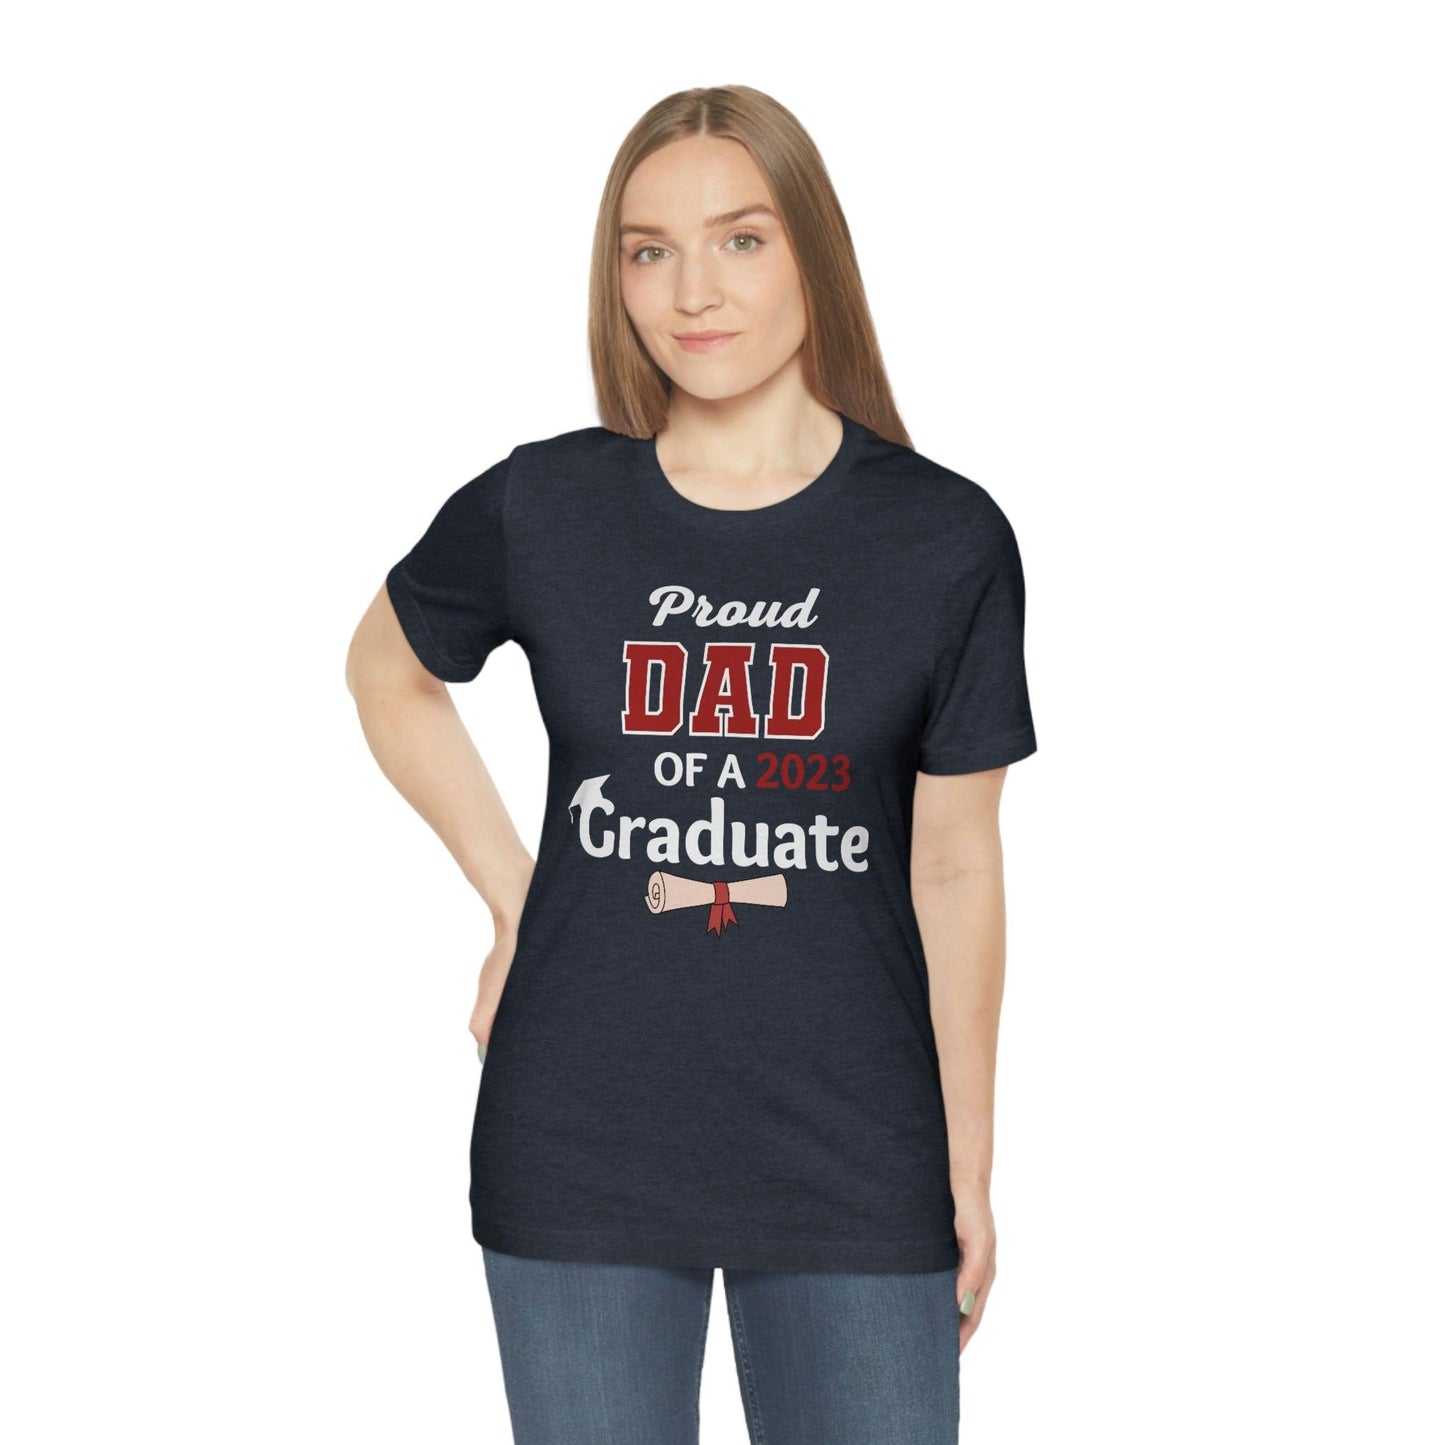 Proud Dad of a graduate - Graduation shirt - Graduation gift - Giftsmojo